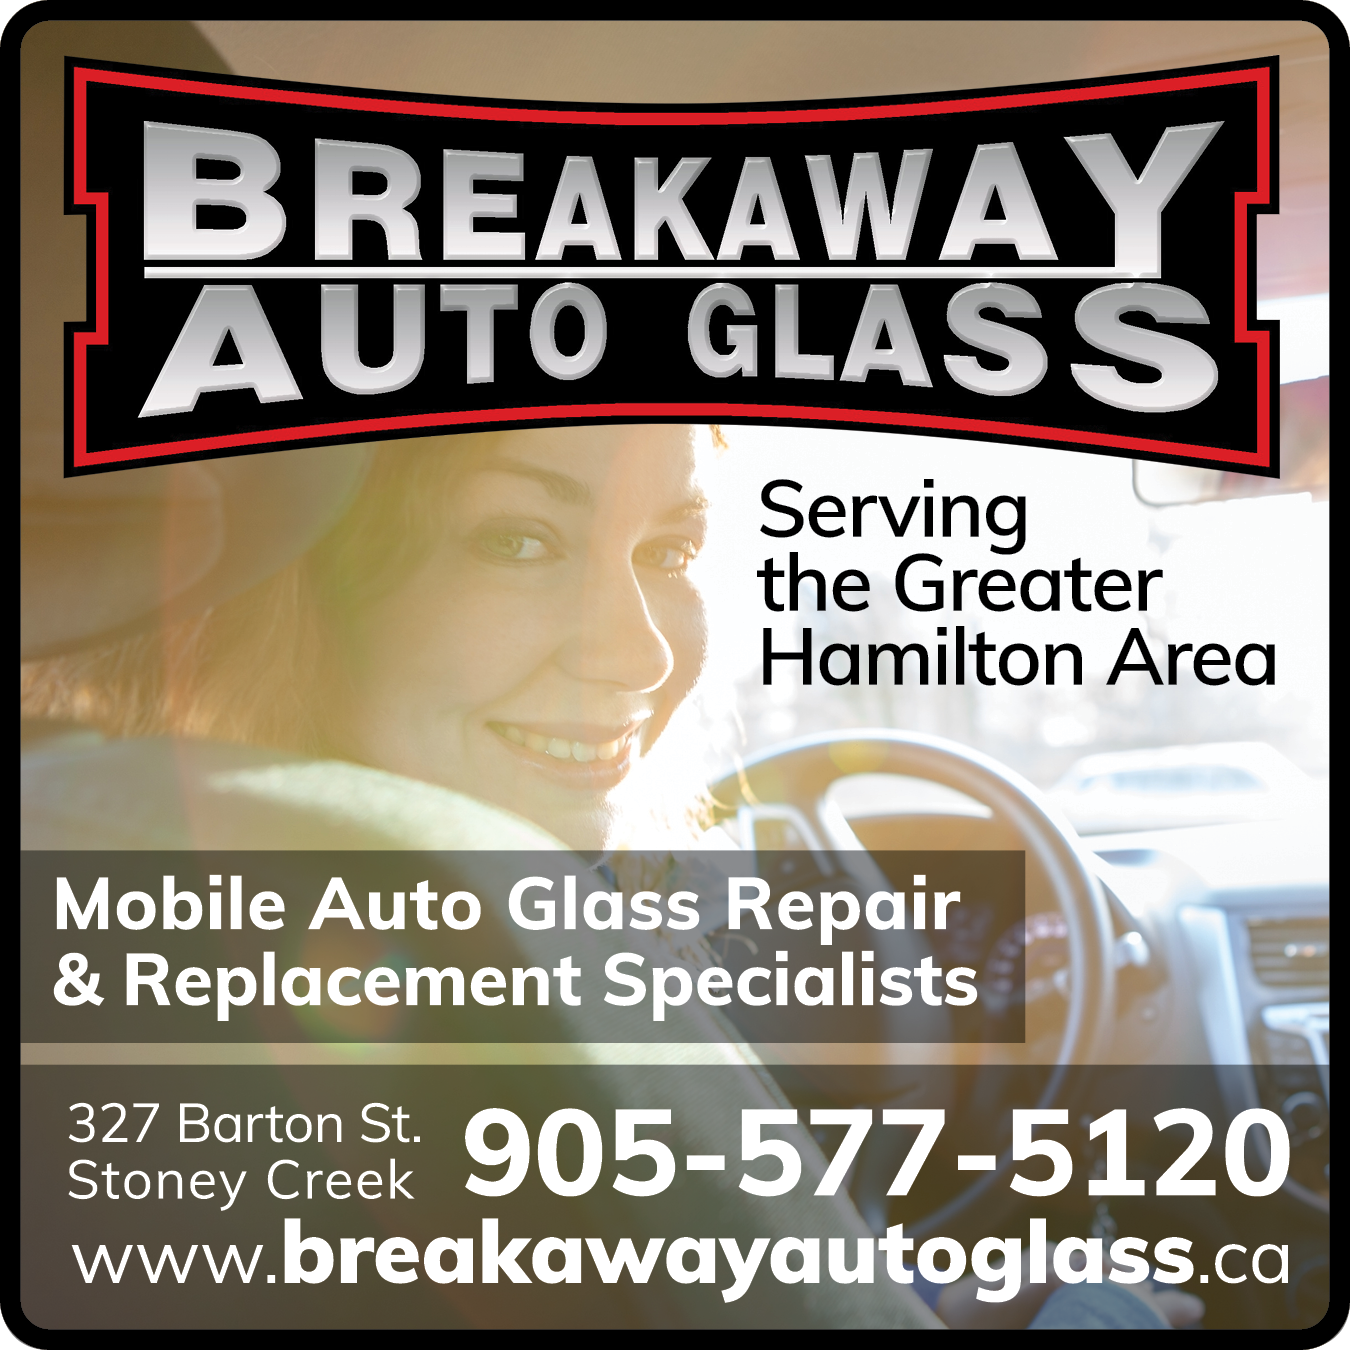 Breakaway Auto Glass Limited